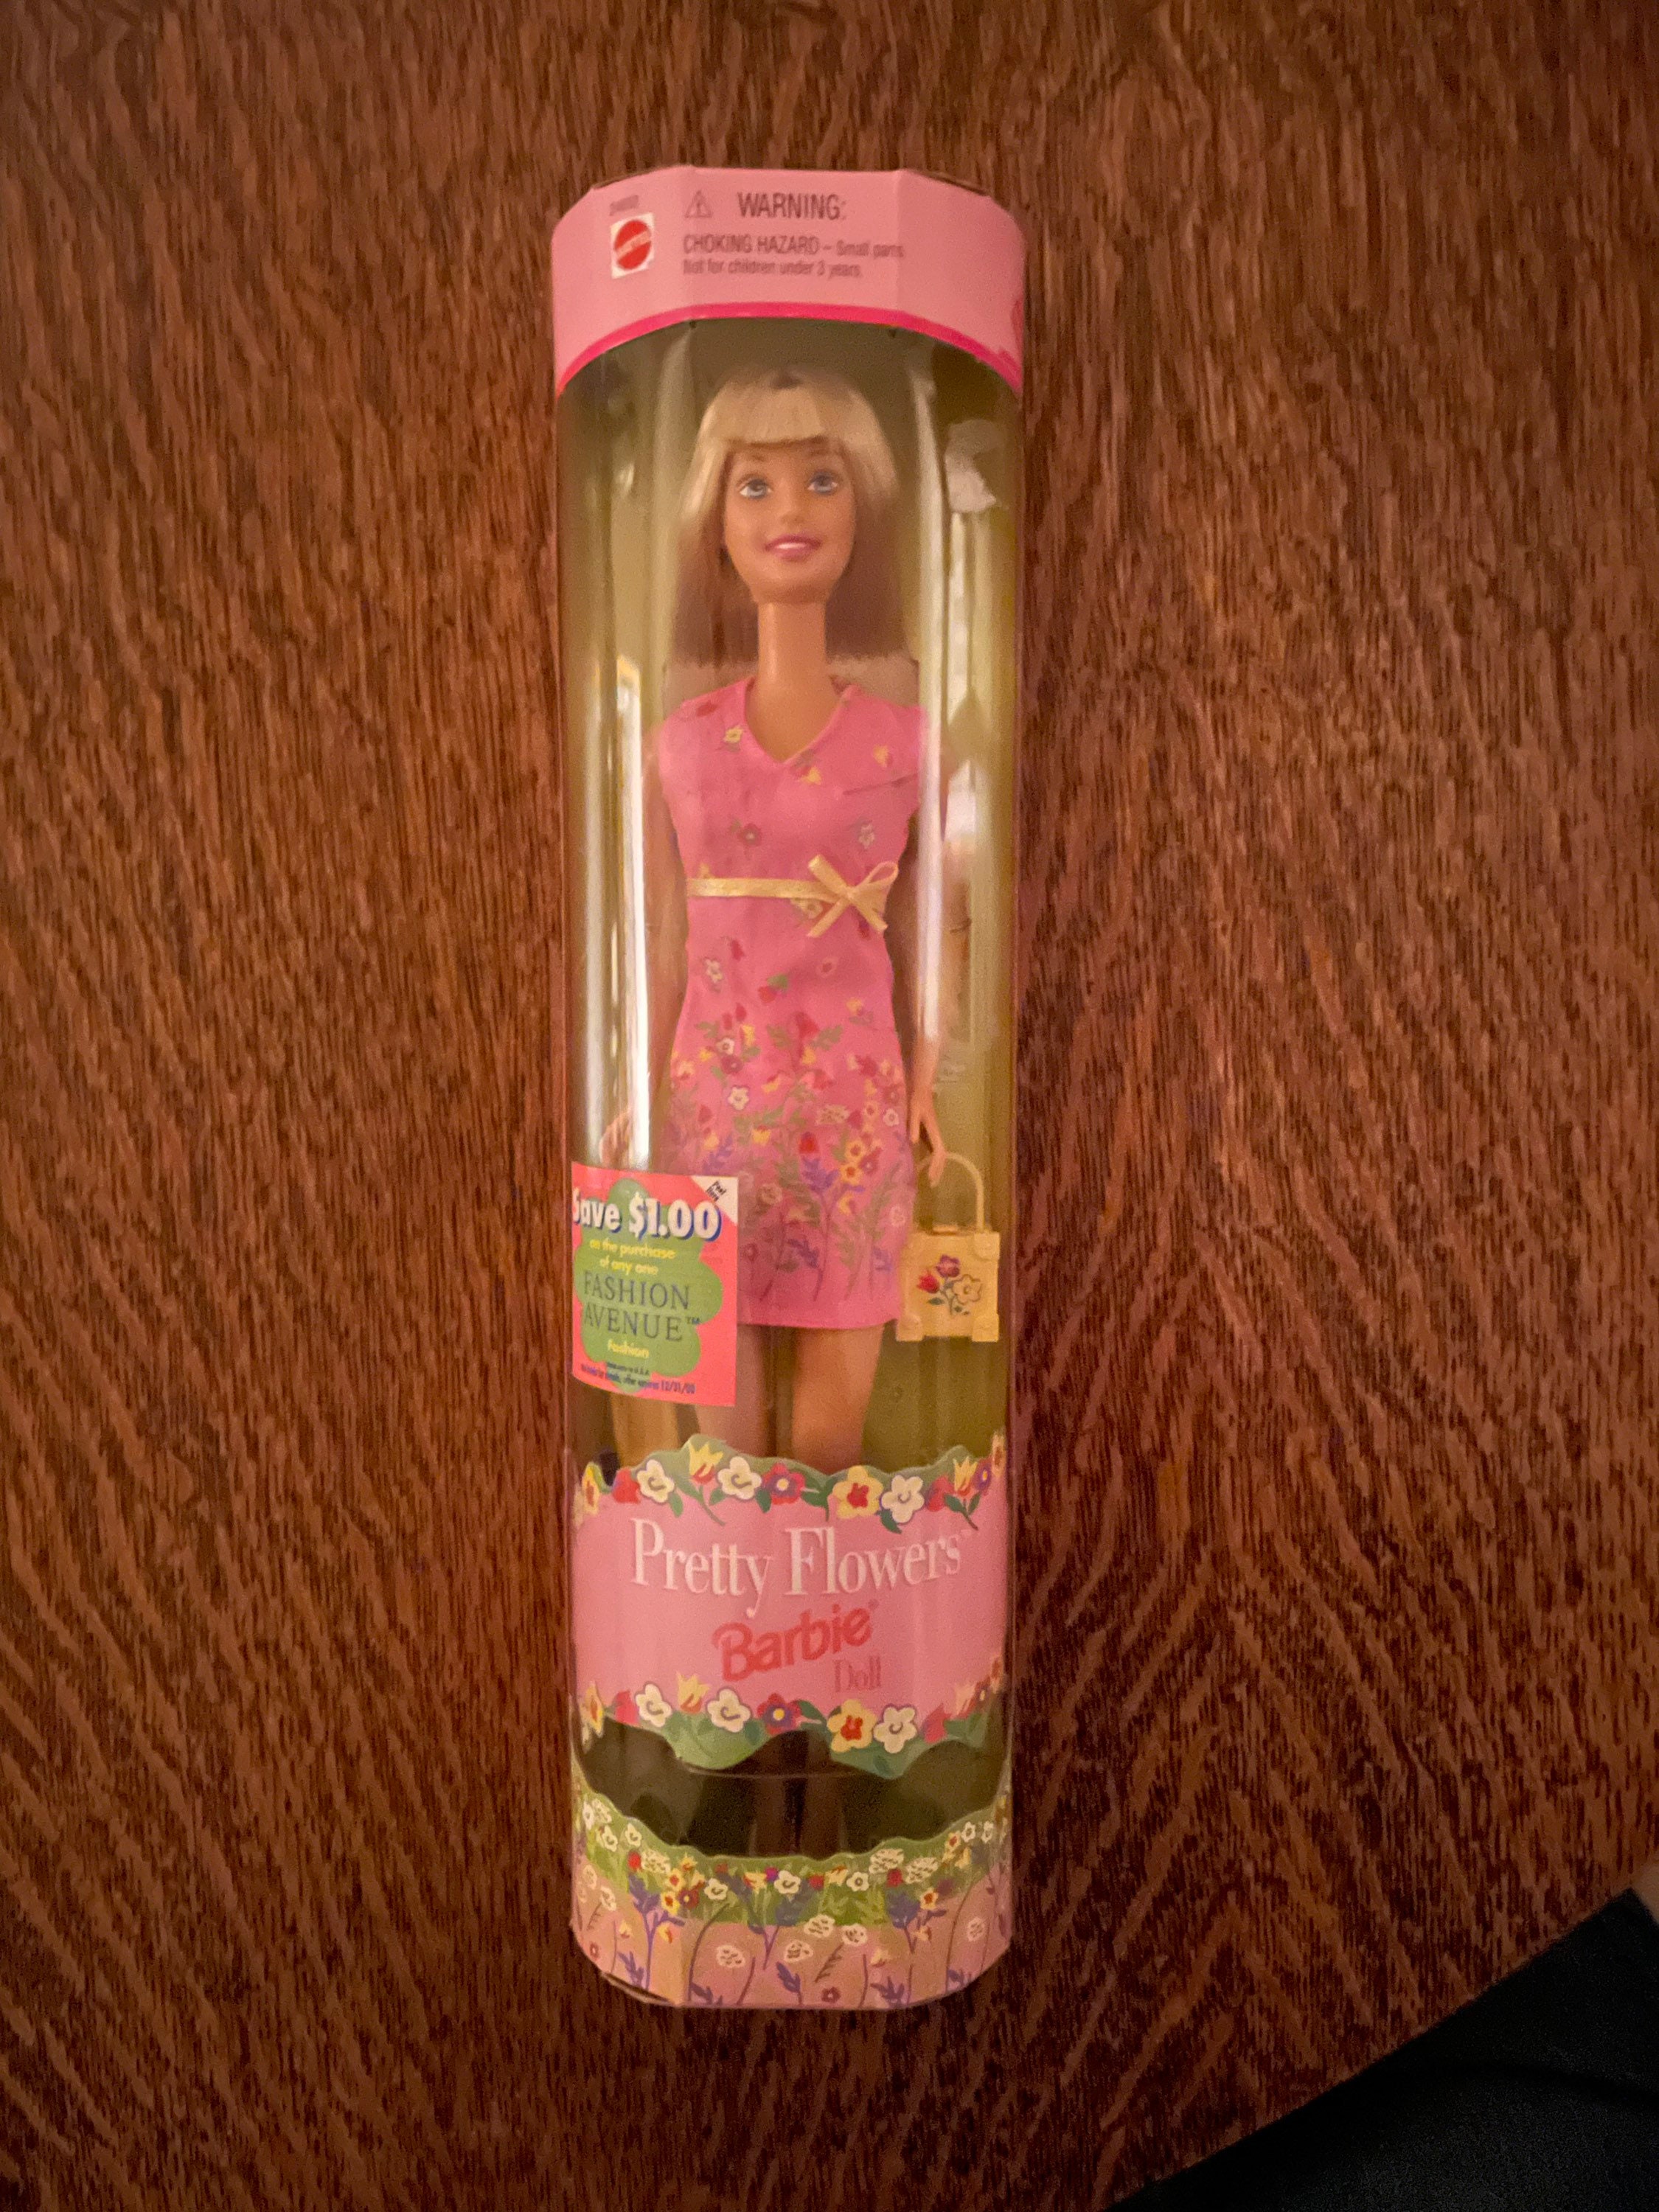 Pretty Flowers Barbie Doll New in Box 1999 - Etsy